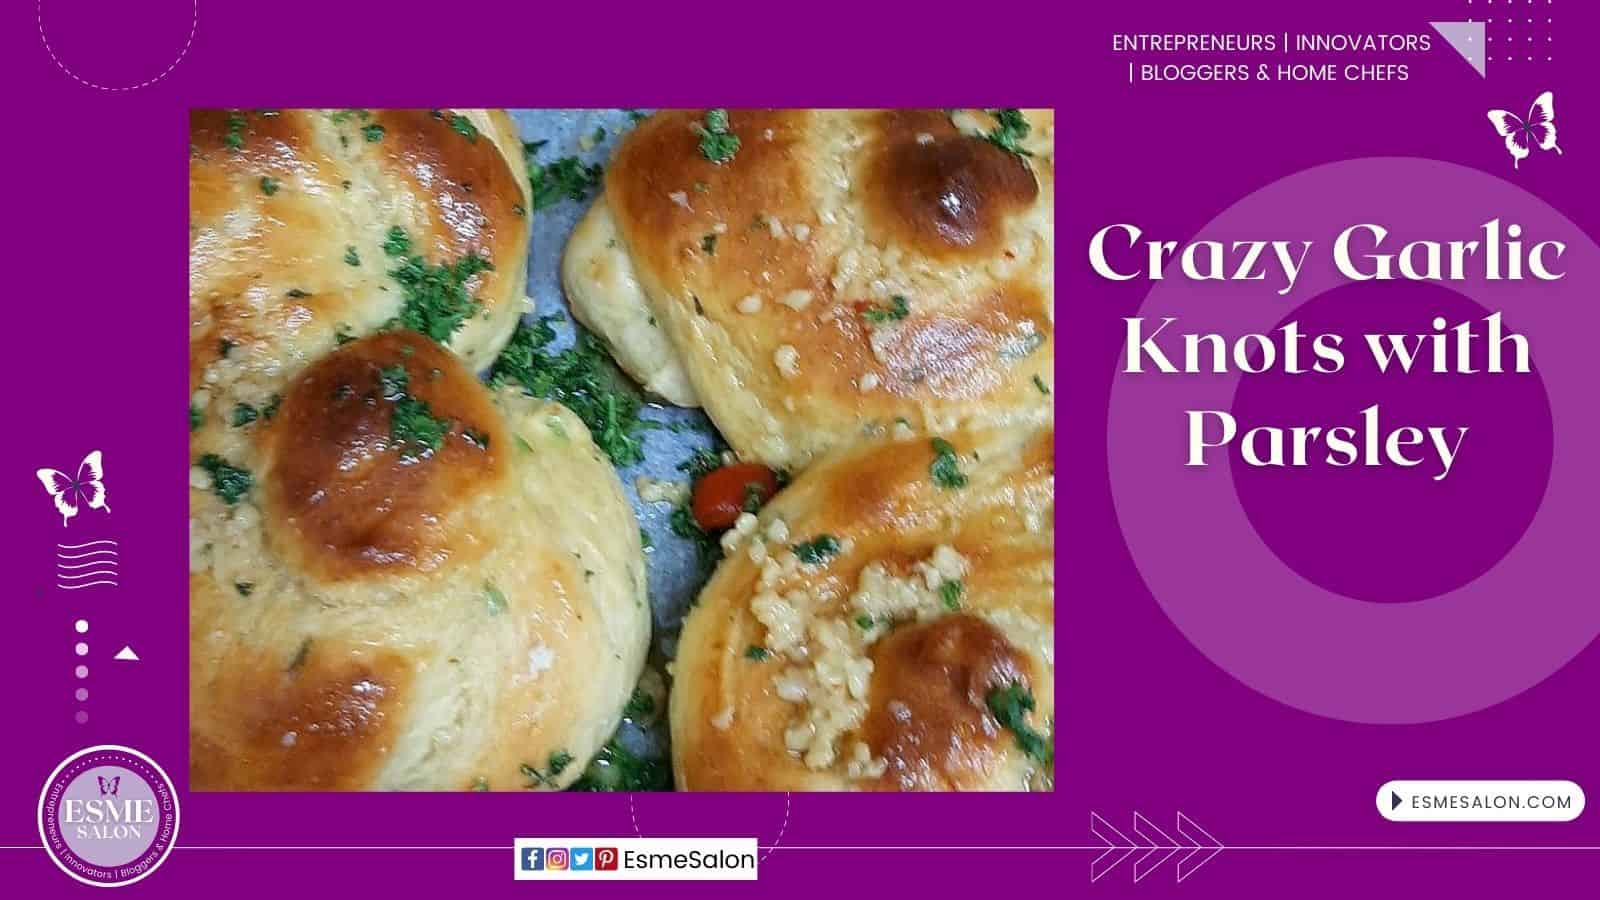 An image of 4 garlic knots (bread) on a platter